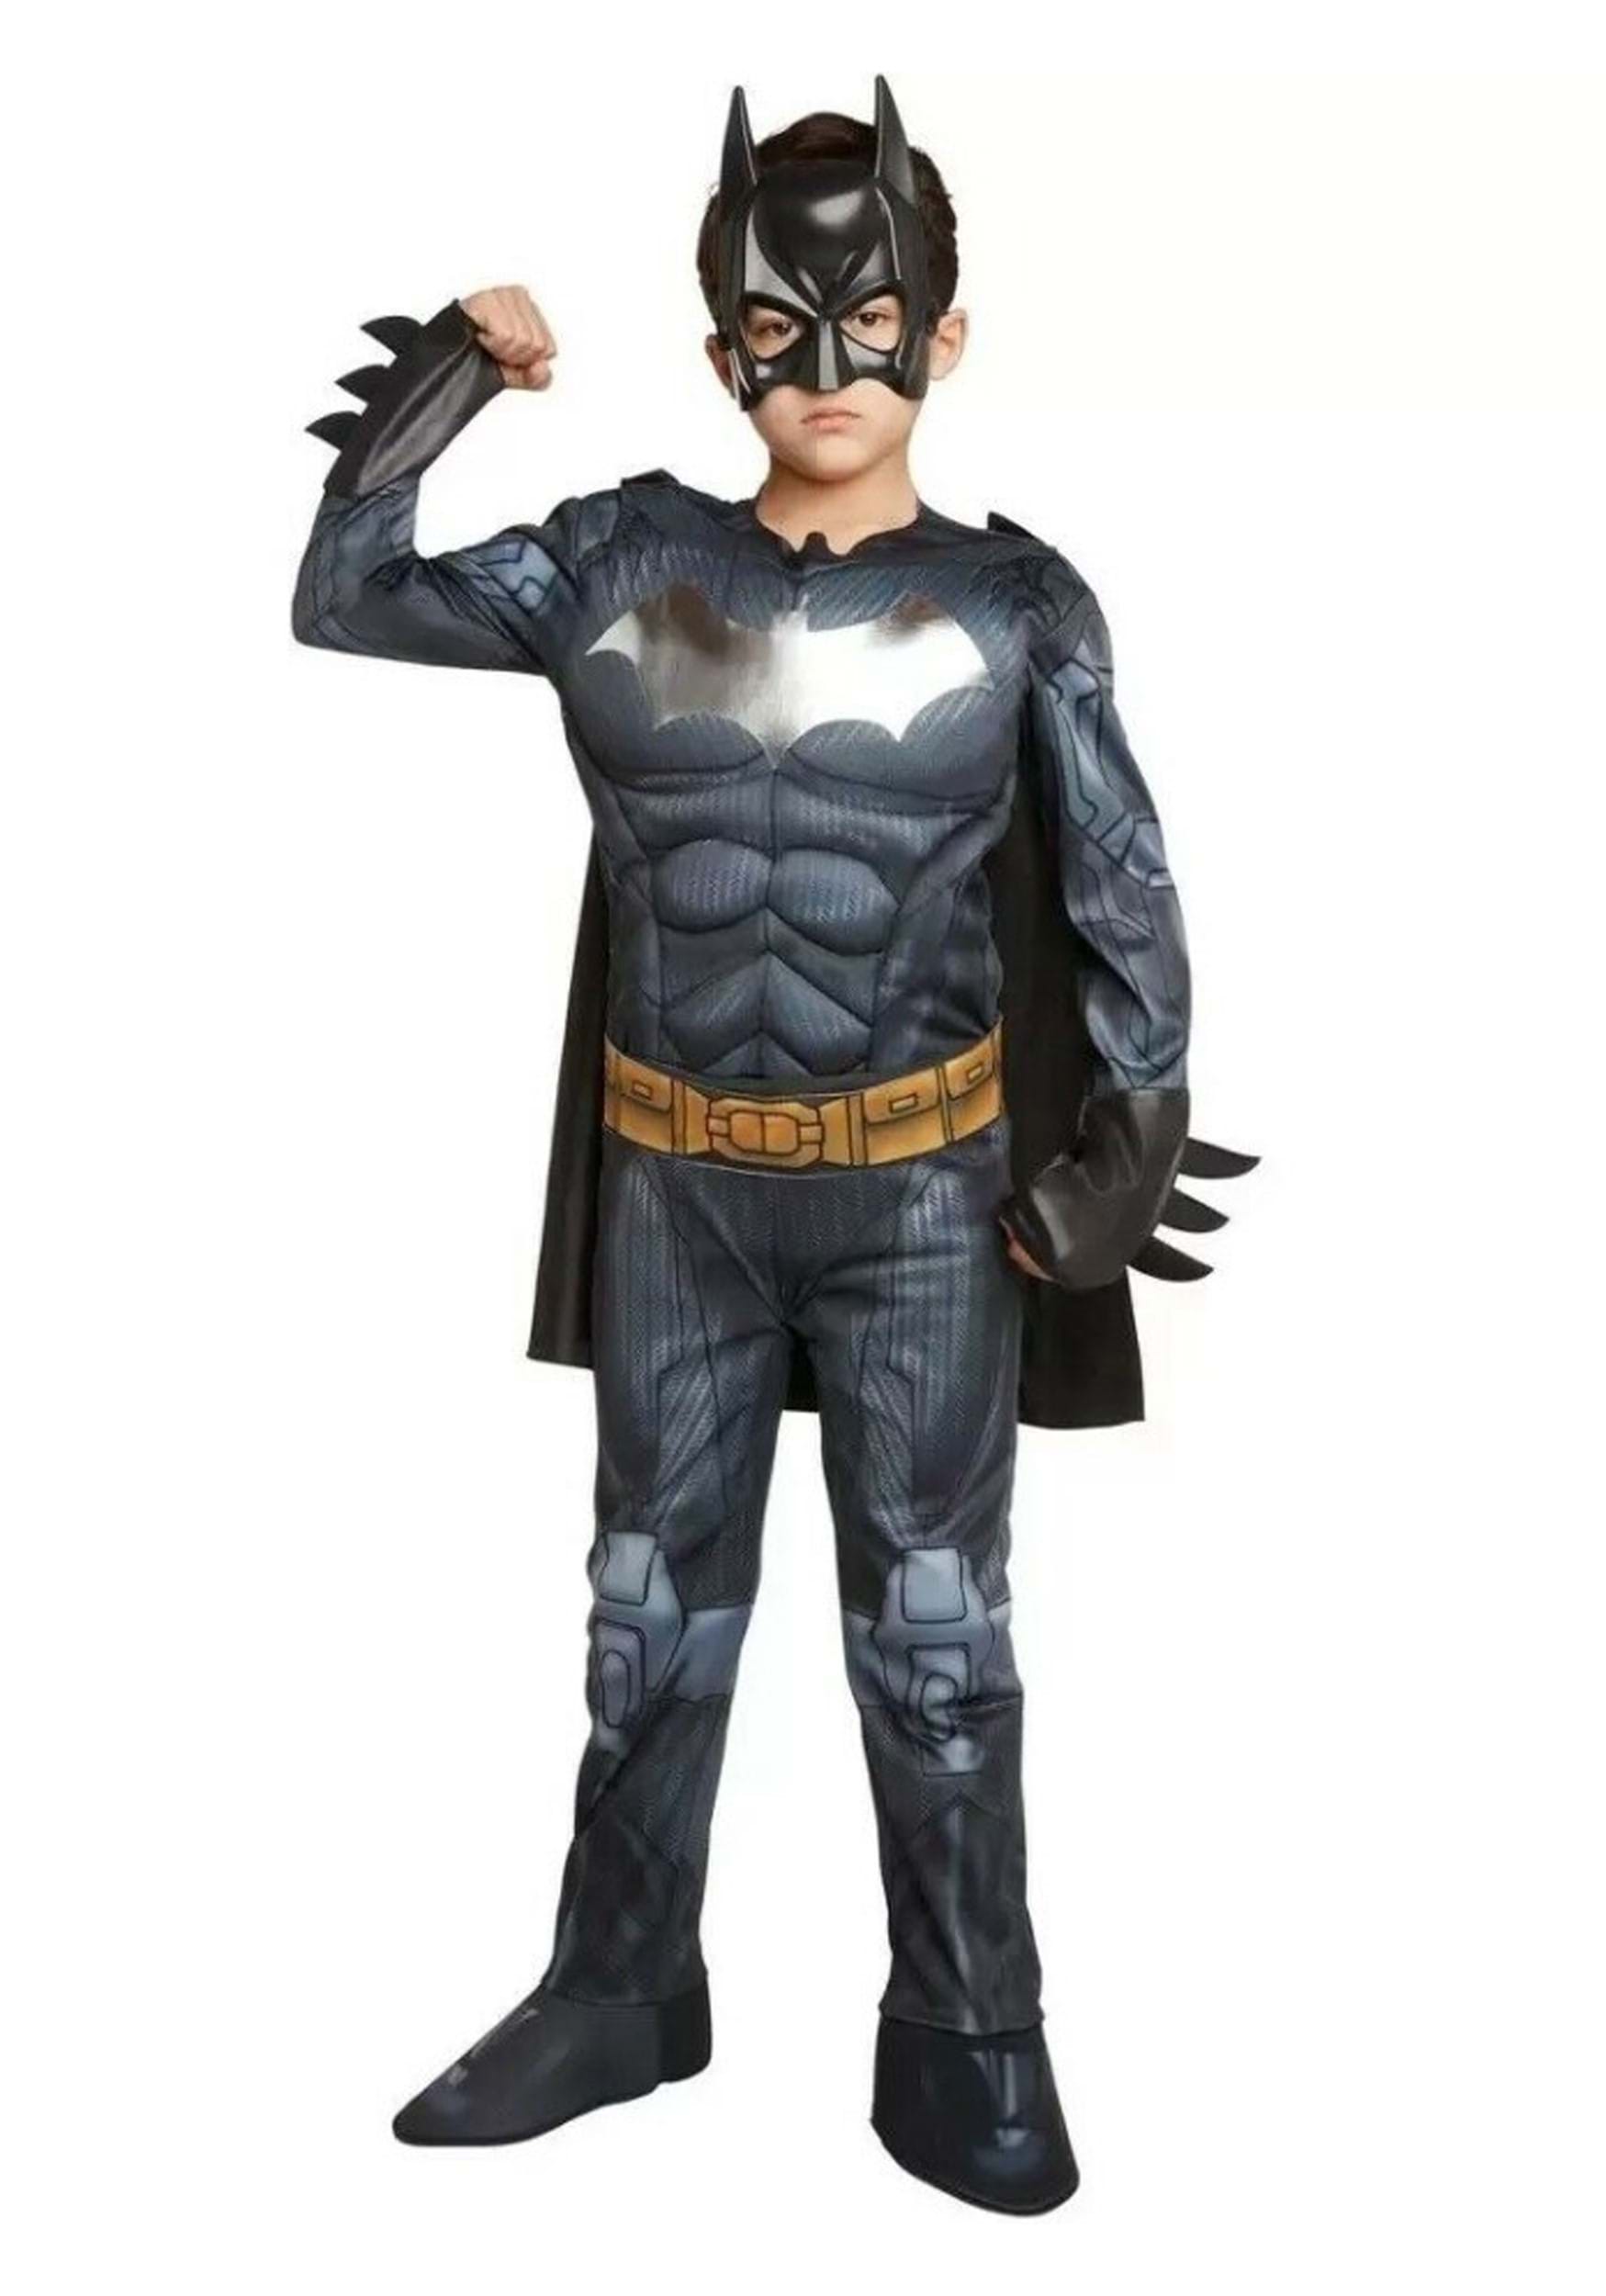 Justice League Batman Muscle Kids Costume